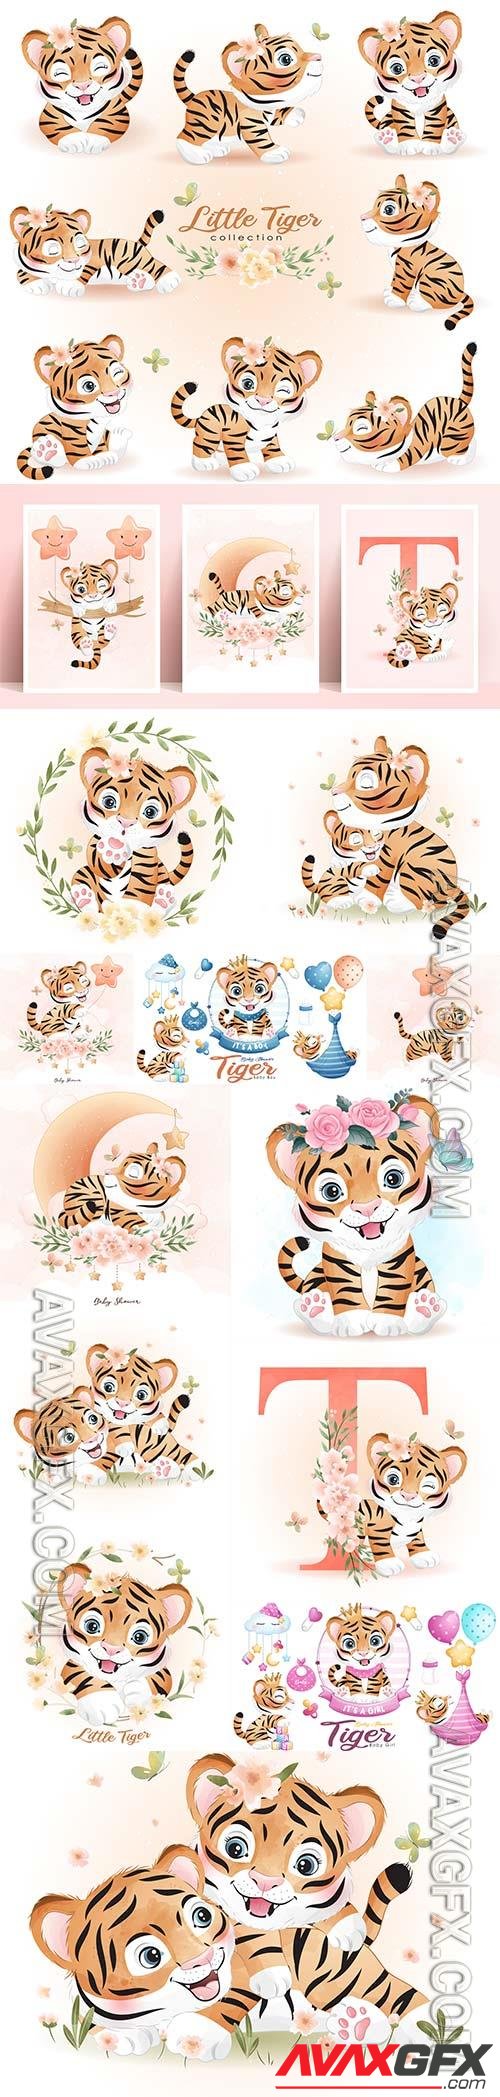 Cute doodle tiger with watercolor illustration set premium vector